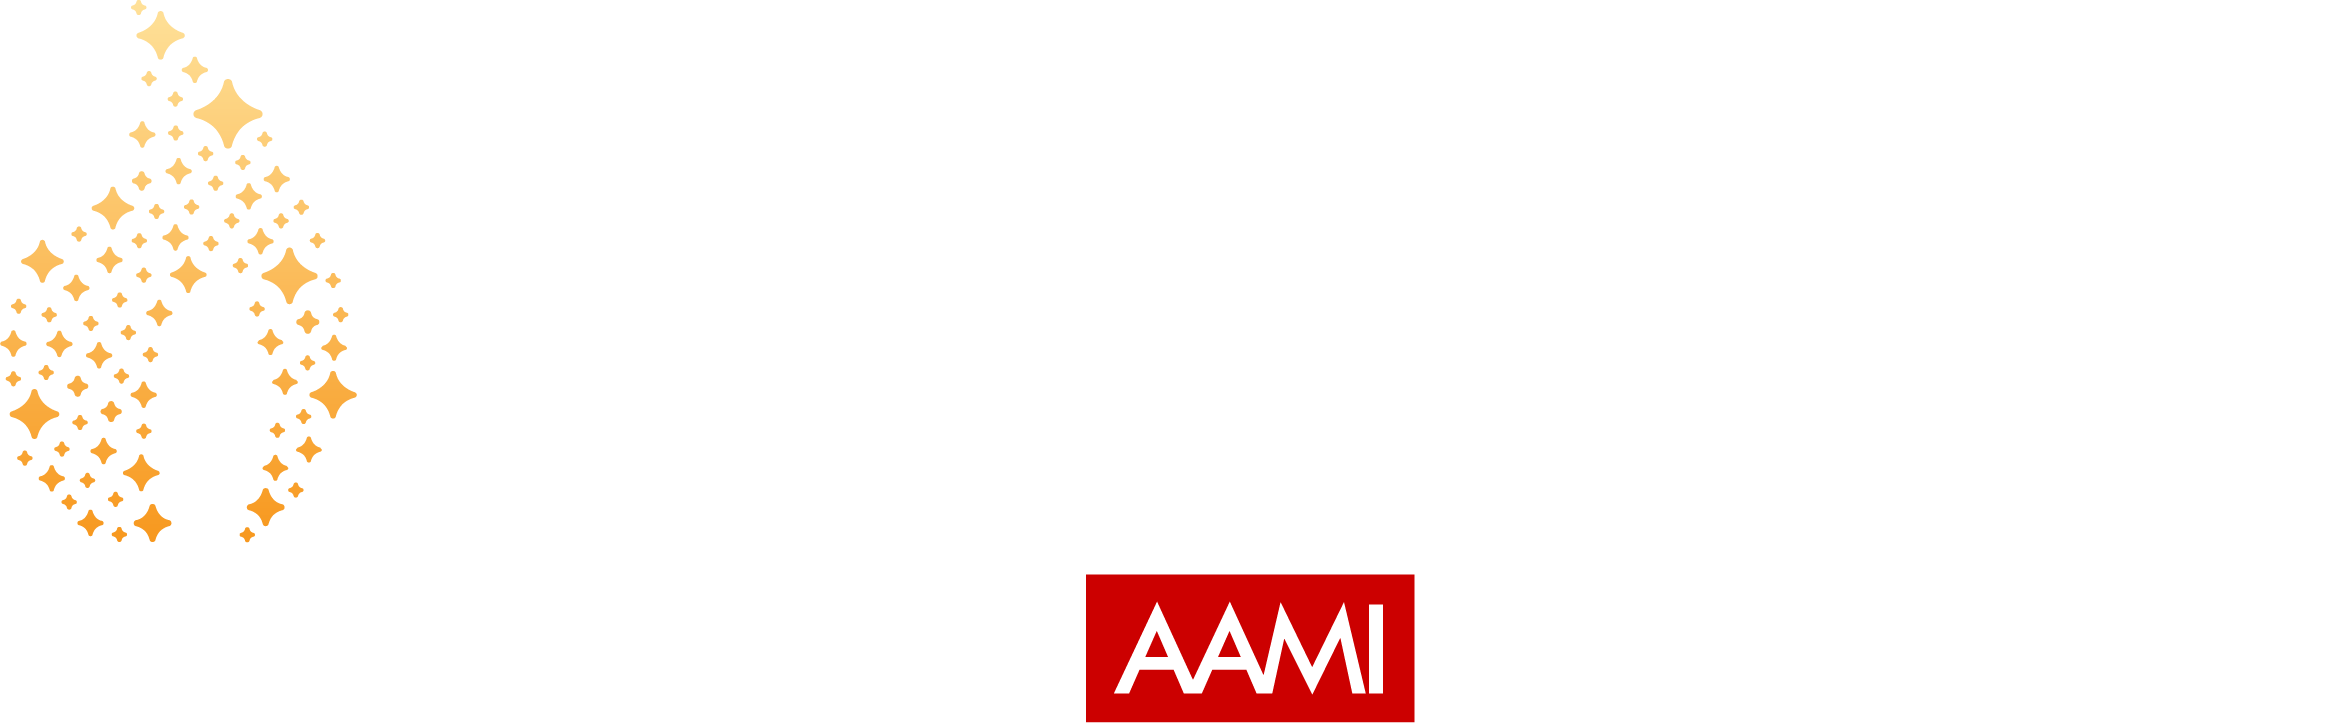 vision australia's carols by candelight. Presented by priceline pharmacy - logo